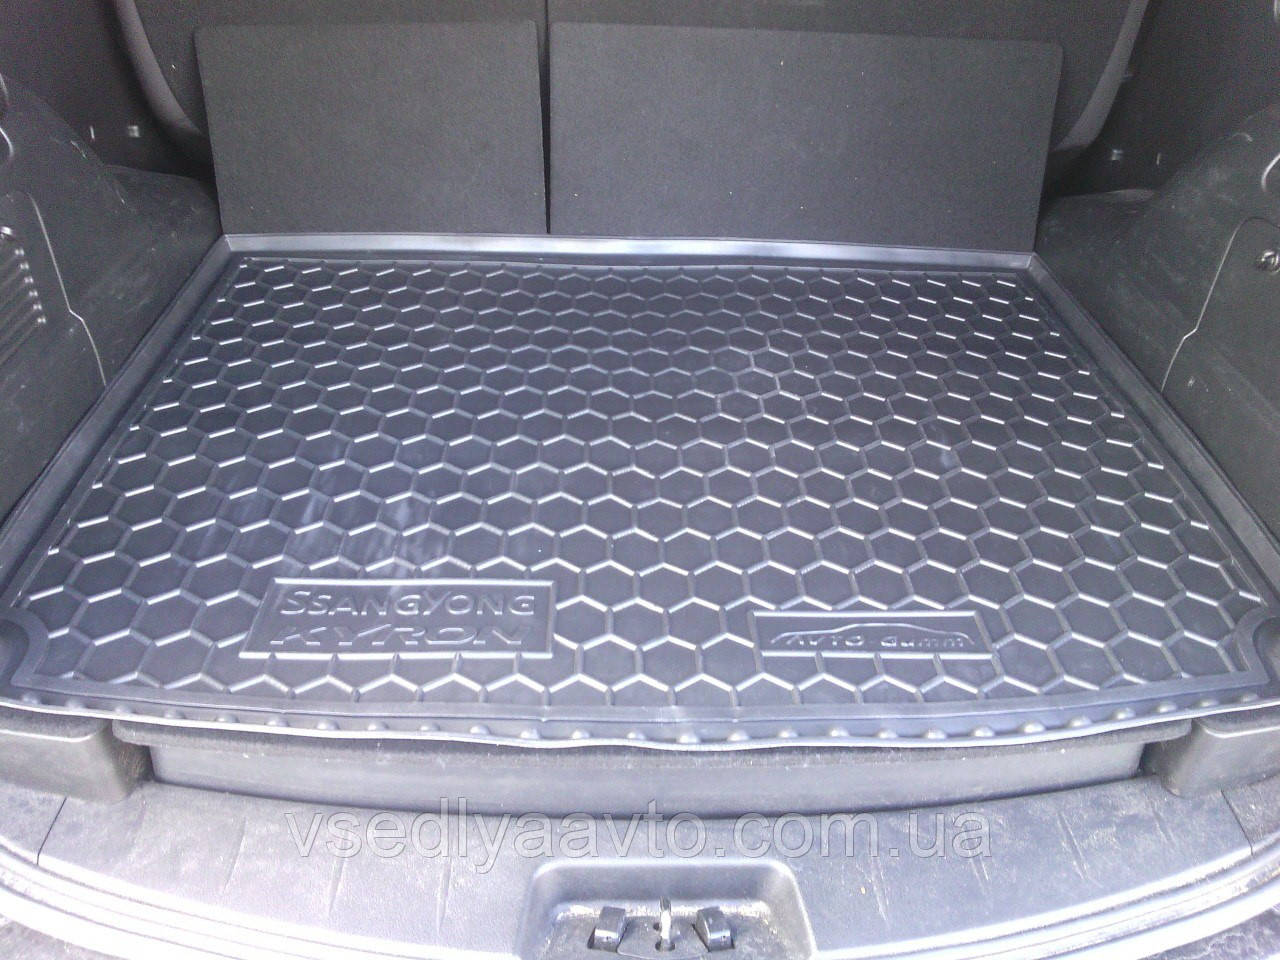 Коврик в багажник SSANG YONG Kyron с органайзером (AVTO-GUMM) пластик+резина